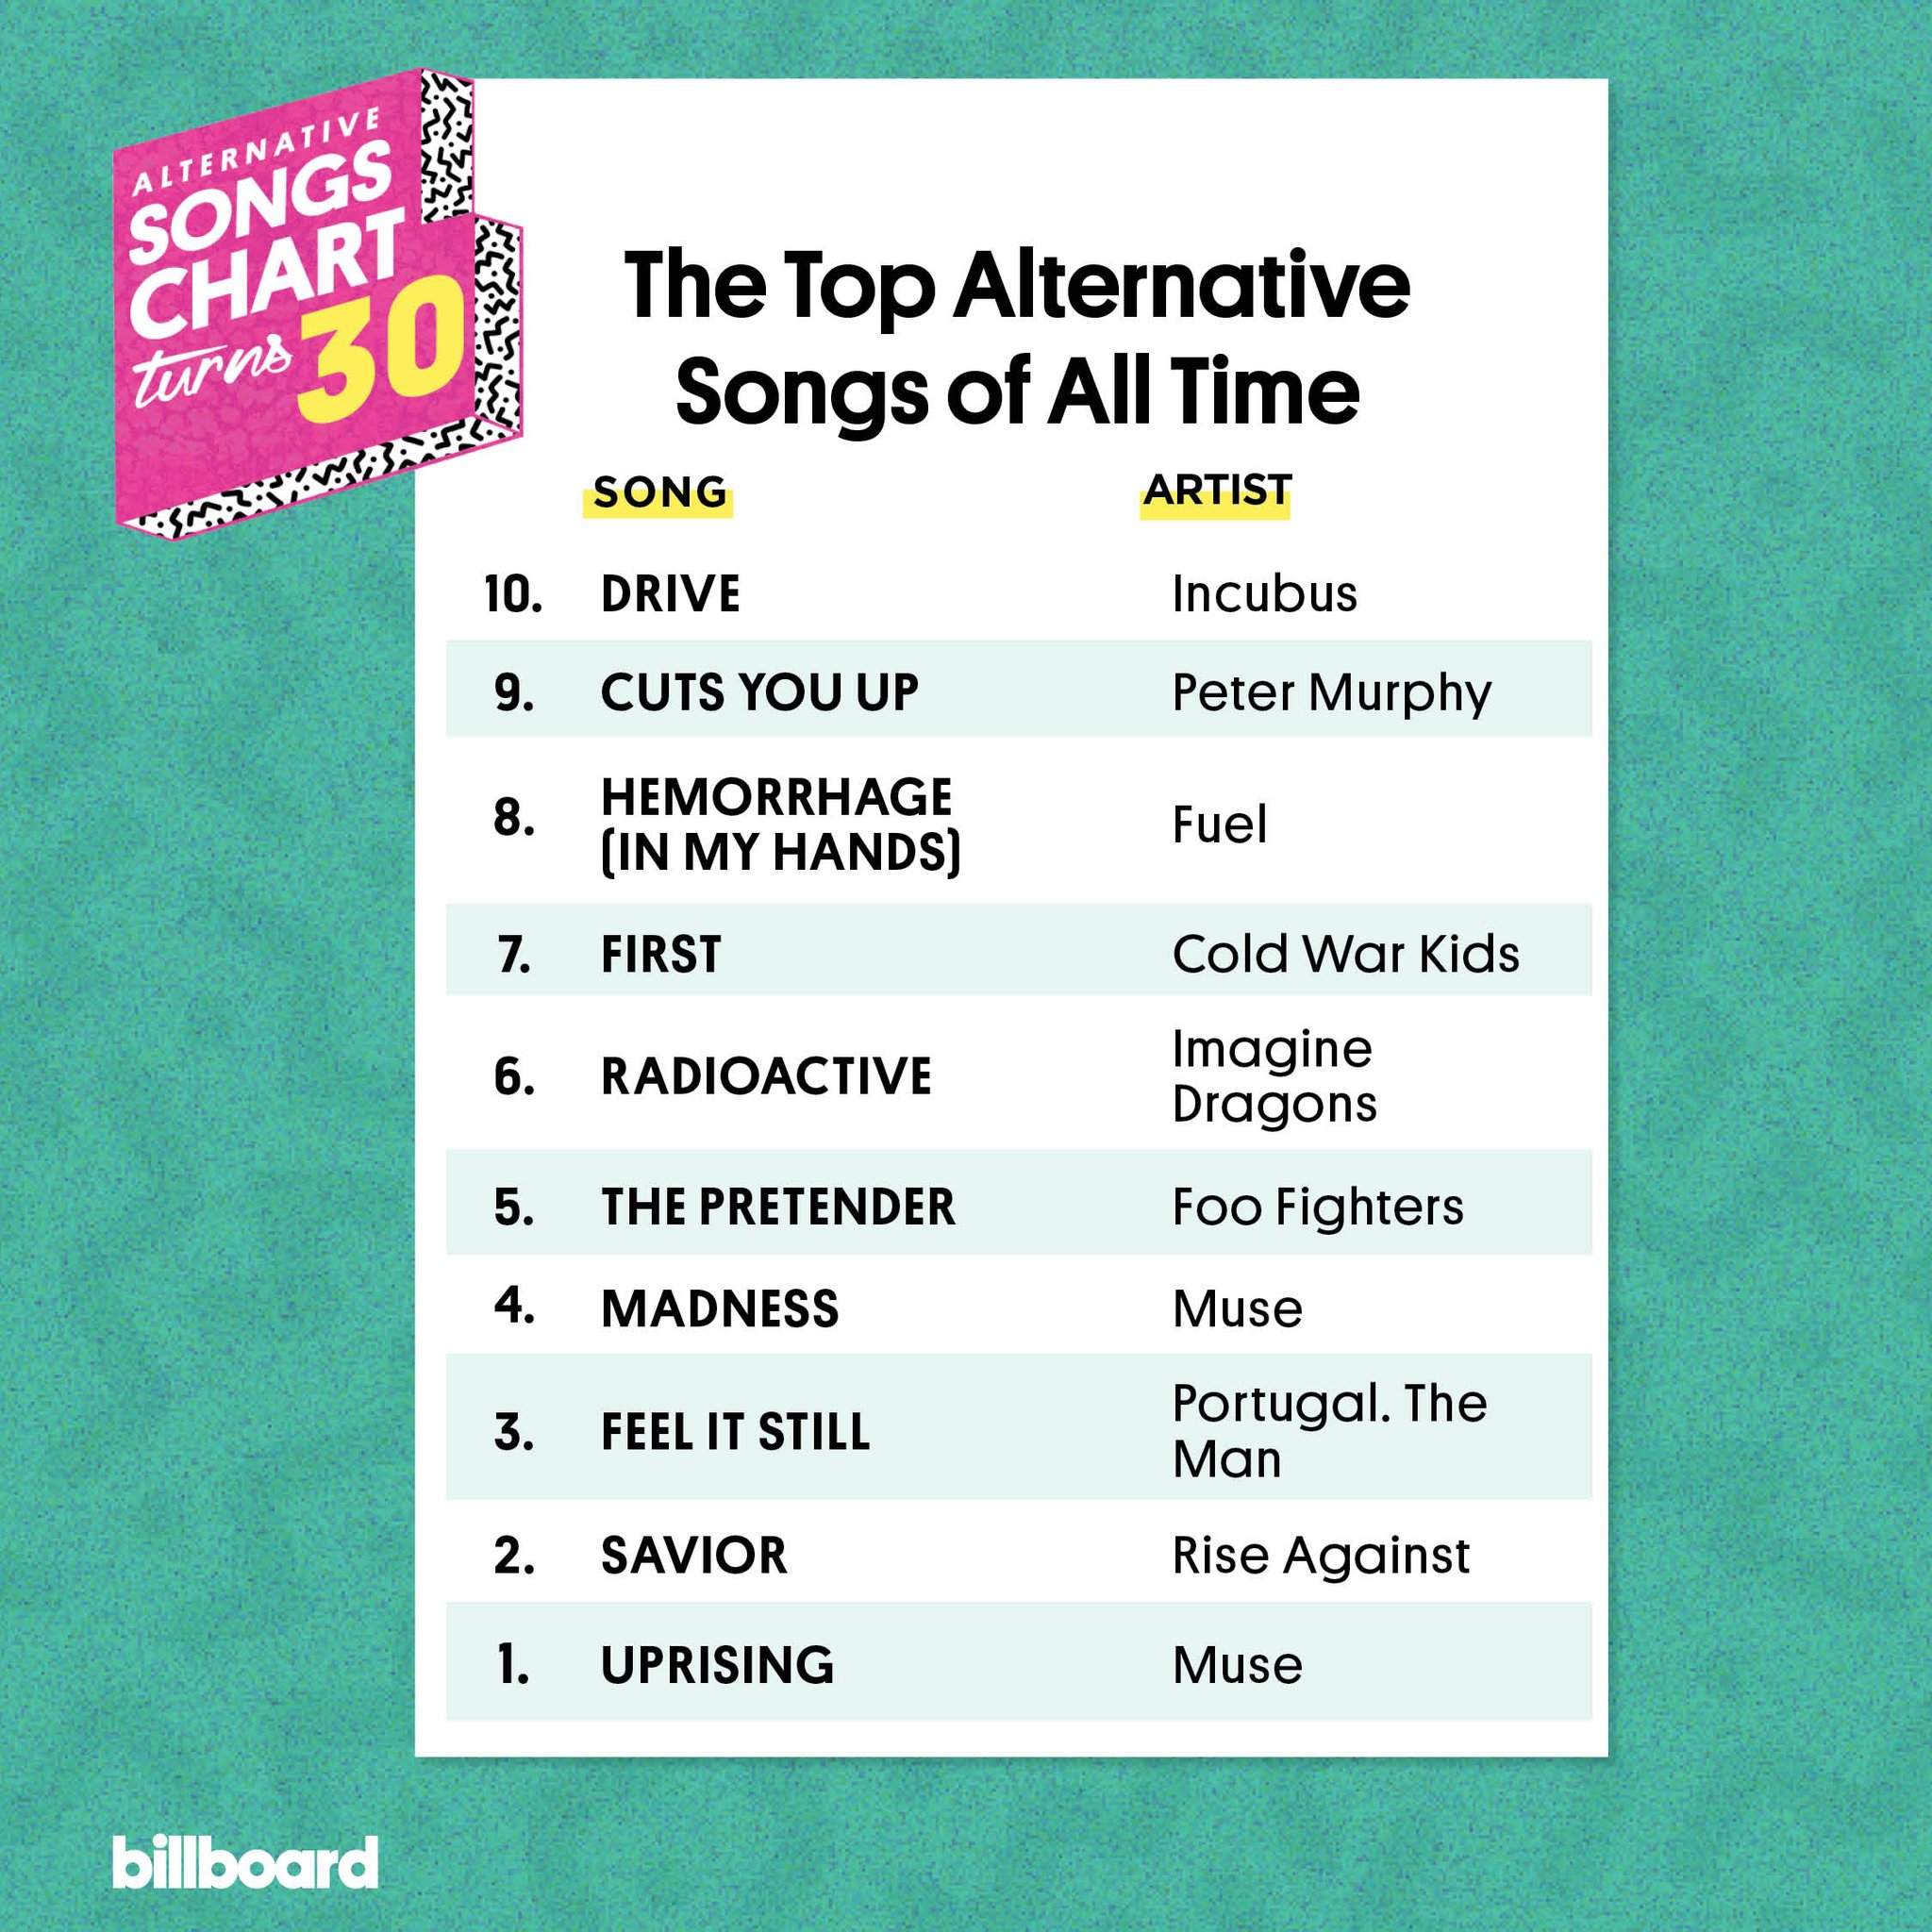 billboard charts on Twitter: "The top 10 alternative songs of all time #AltSongsTurns30 Full https://t.co/ovGQ1gt8fe https://t.co/TIdfepZjDr" /